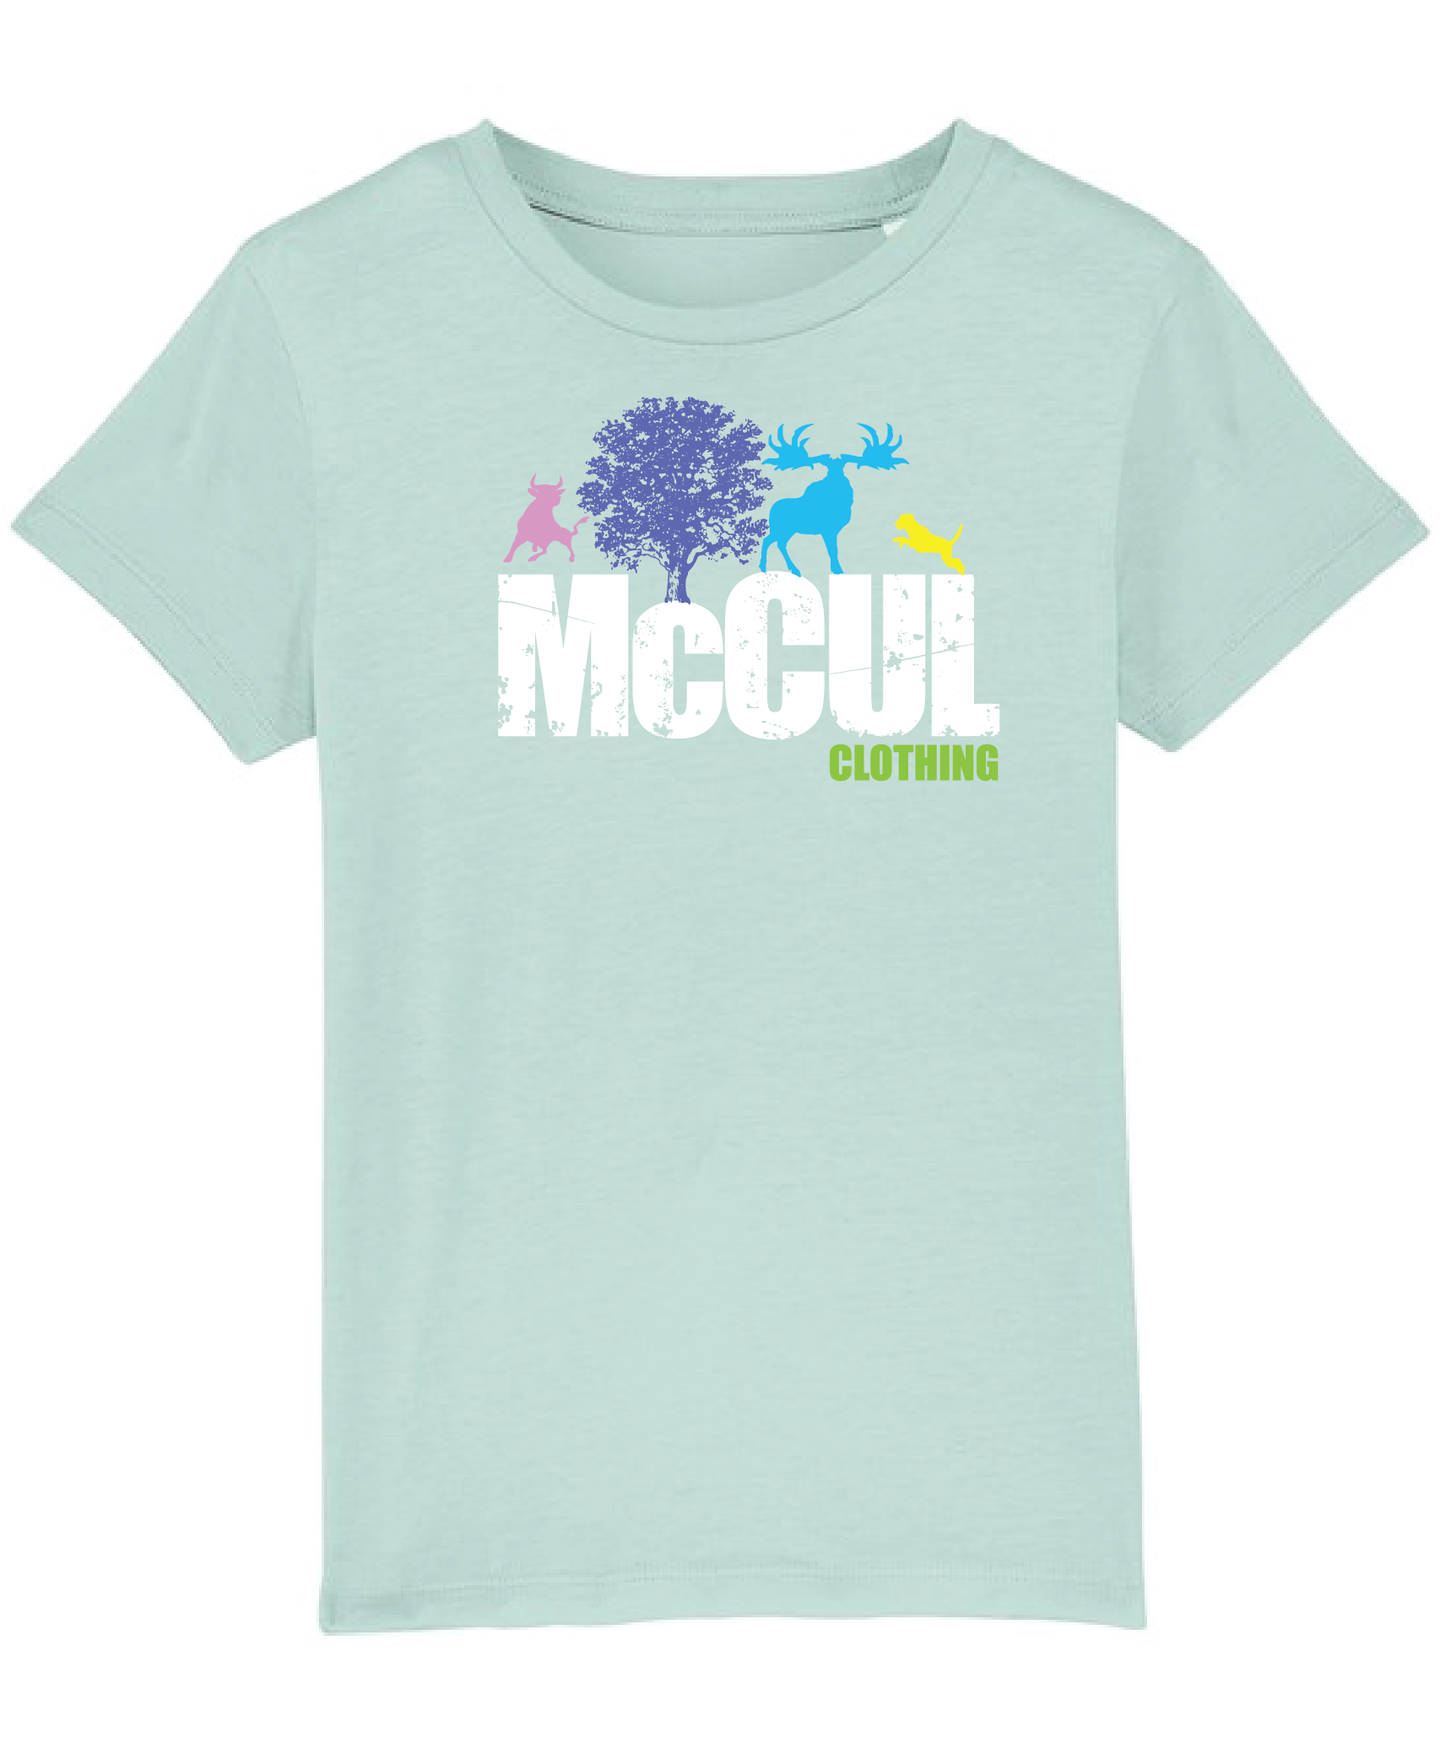 Girls New Organic Caribbean tee shirt with McCul print